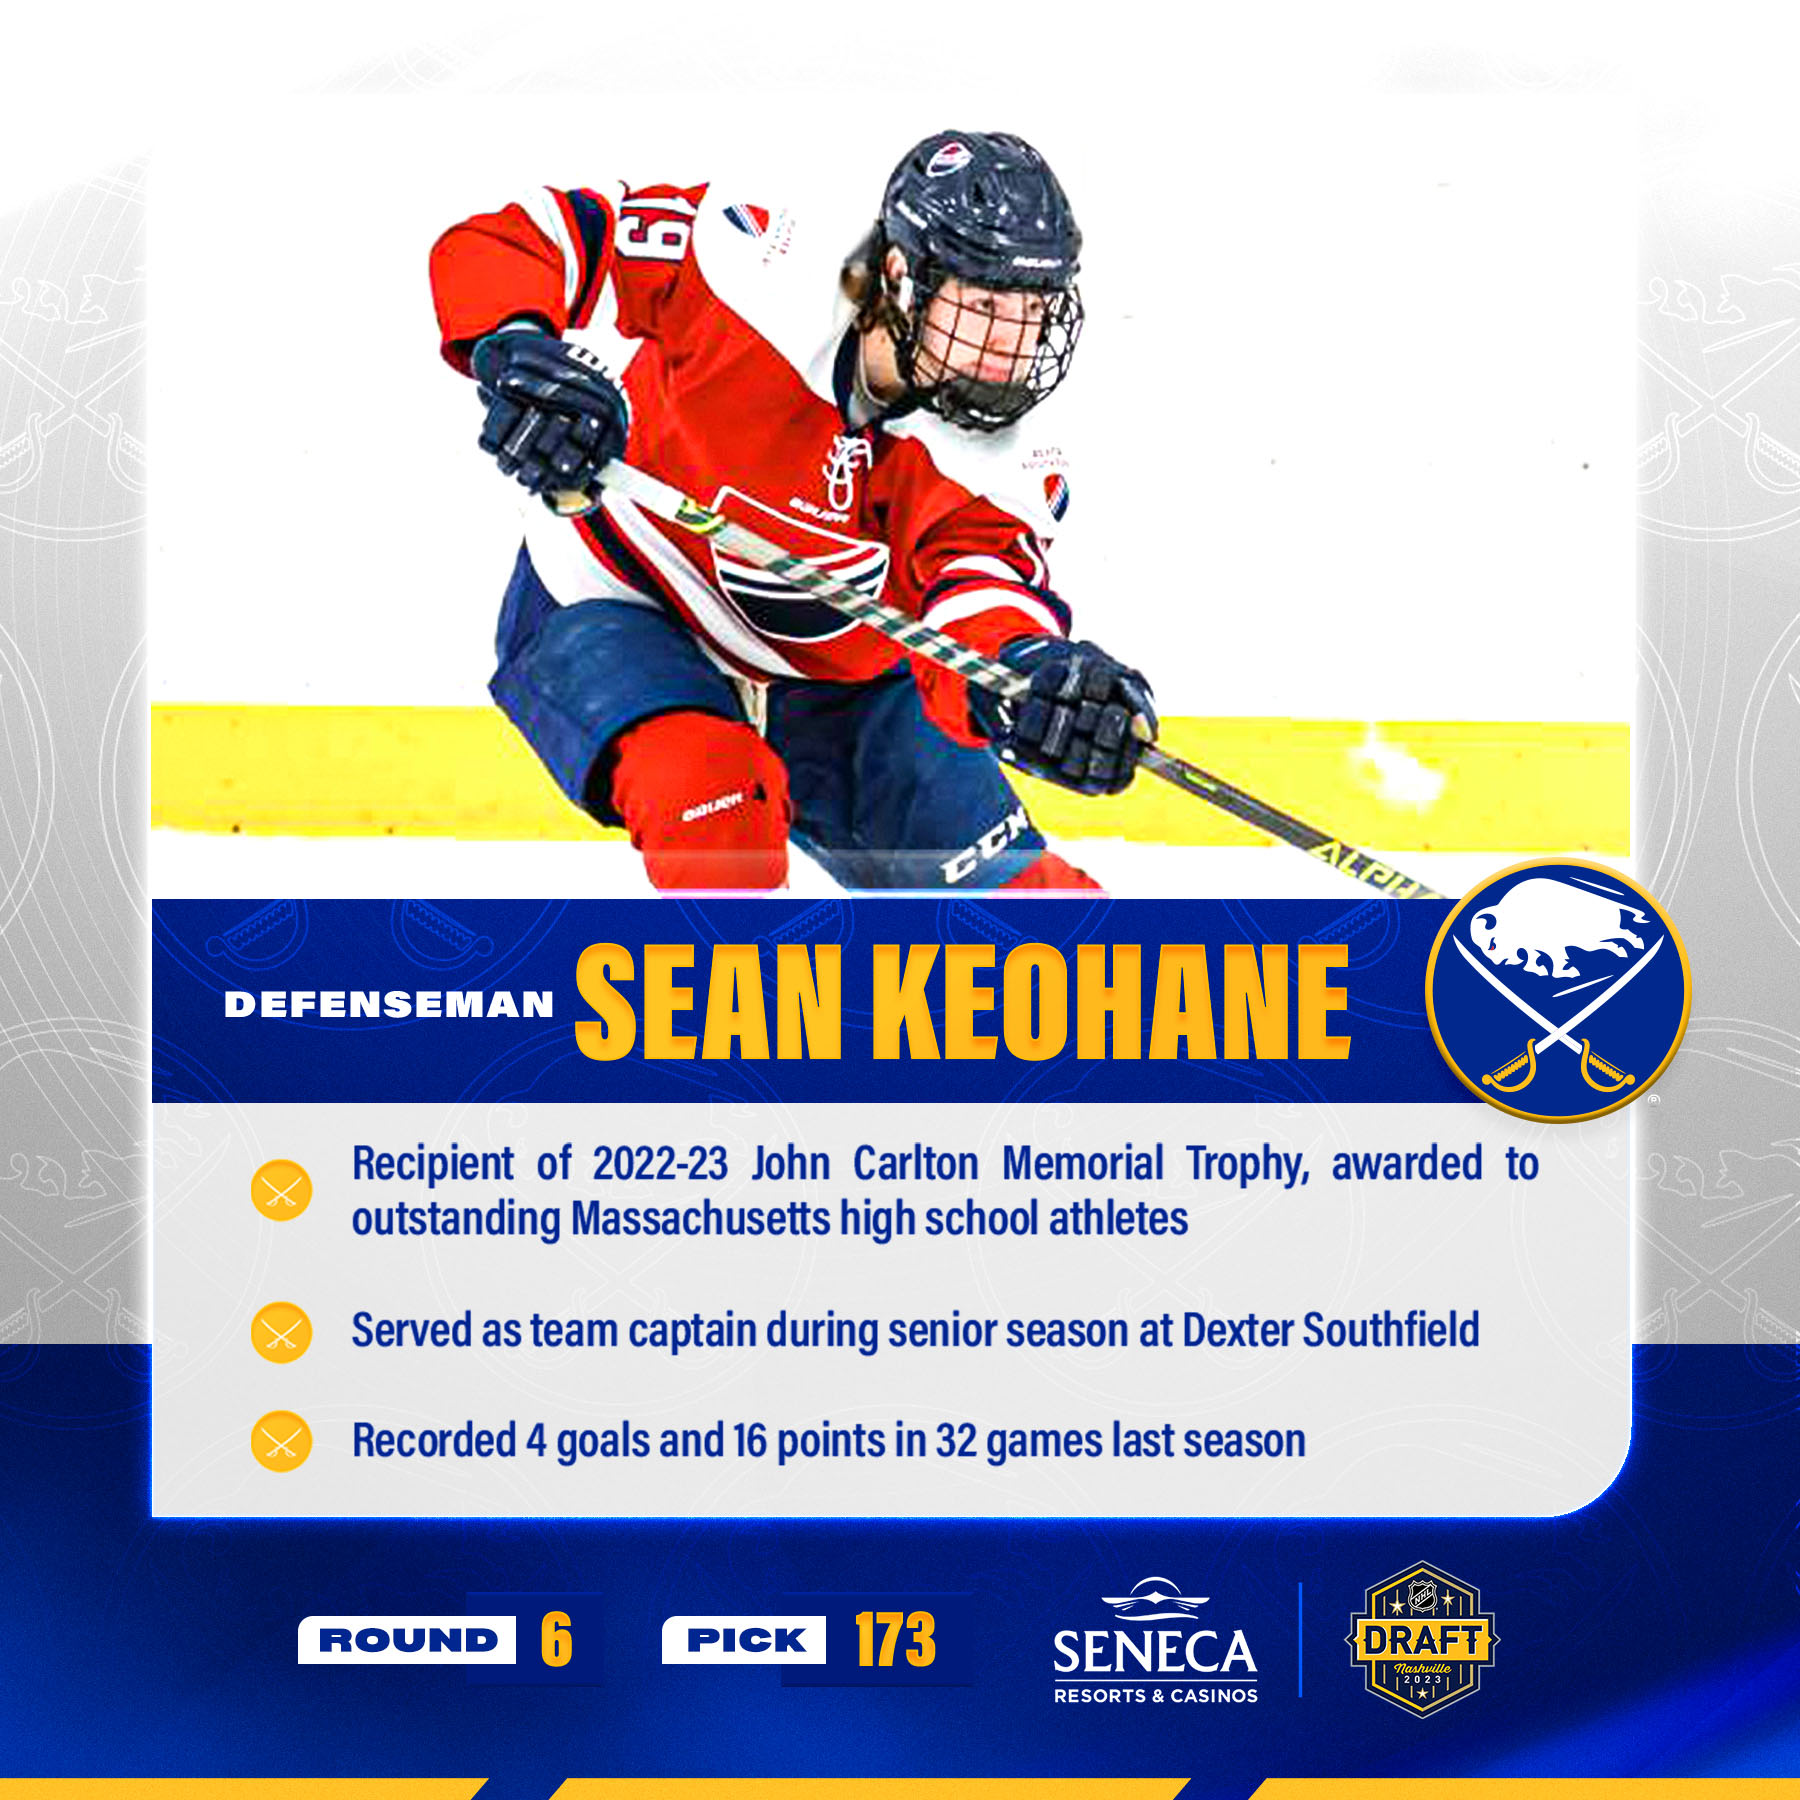 Sean Keohane bio